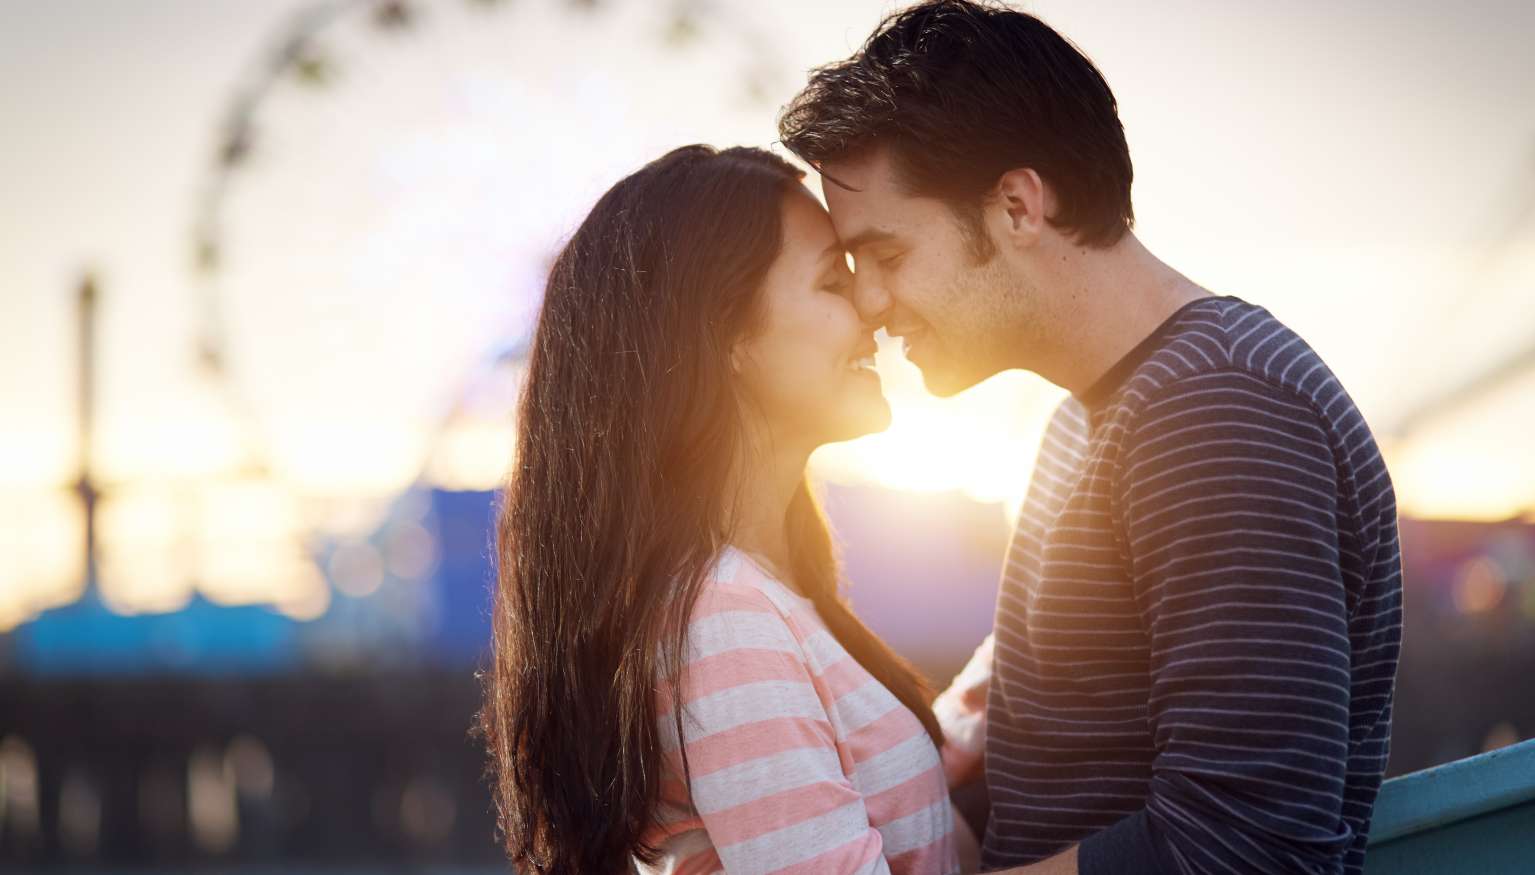 Eσείς γνωρίζατε αυτά τα δέκα πράγματα για το φιλί; (βίντεο)